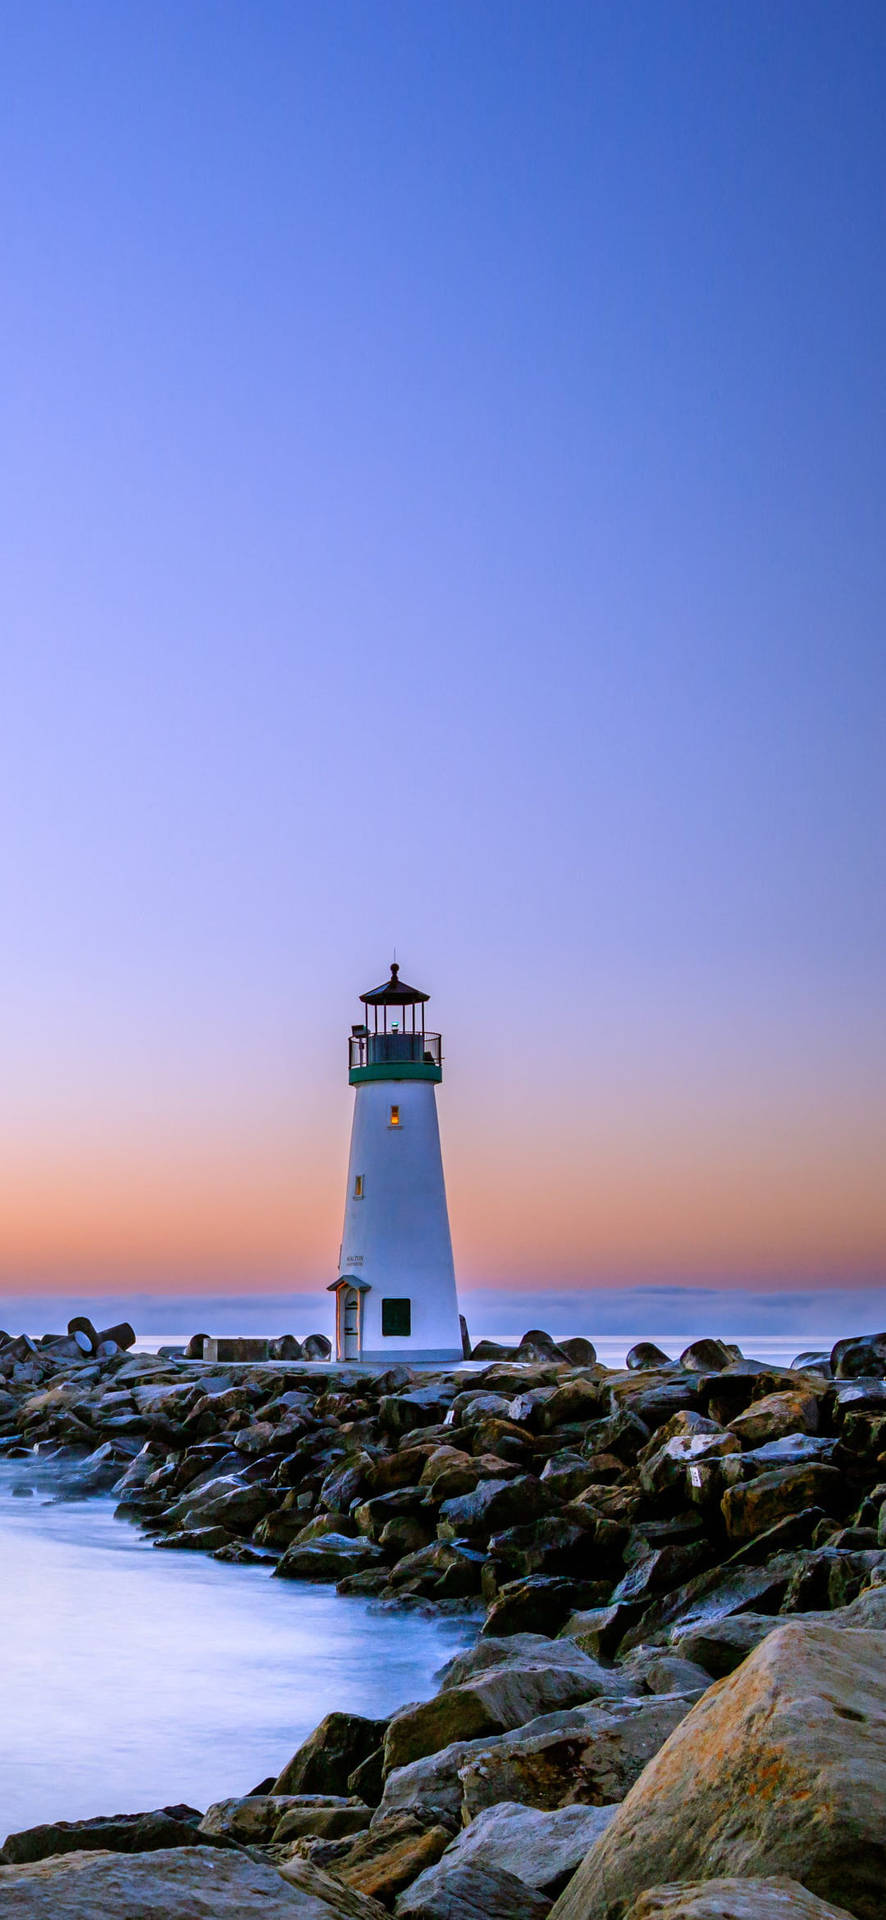 Beach 4k Iphone Lighthouse At Sunset Background